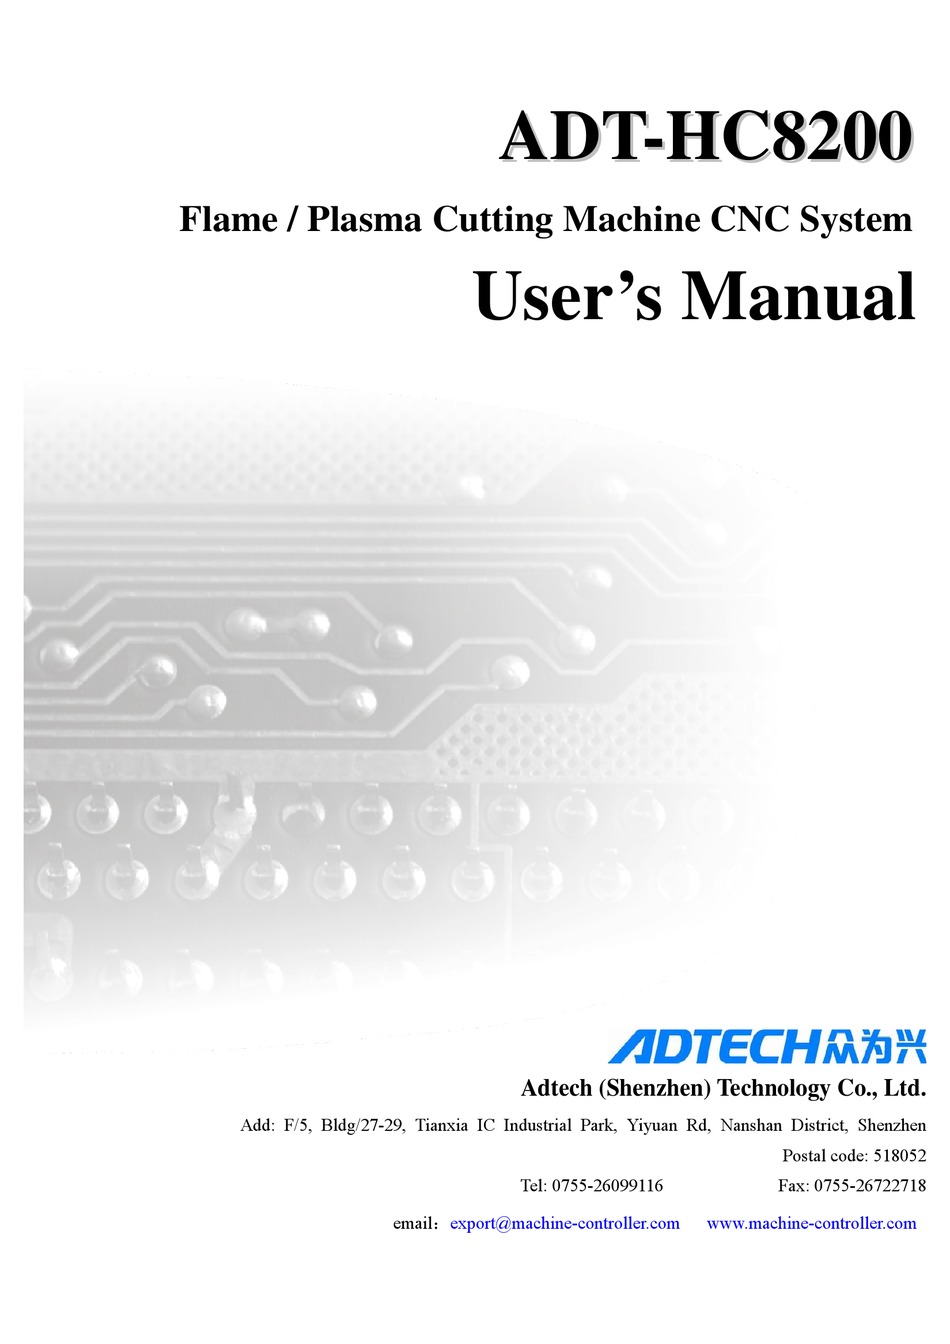 ADTECH ADTHC8200 USER MANUAL Pdf Download ManualsLib